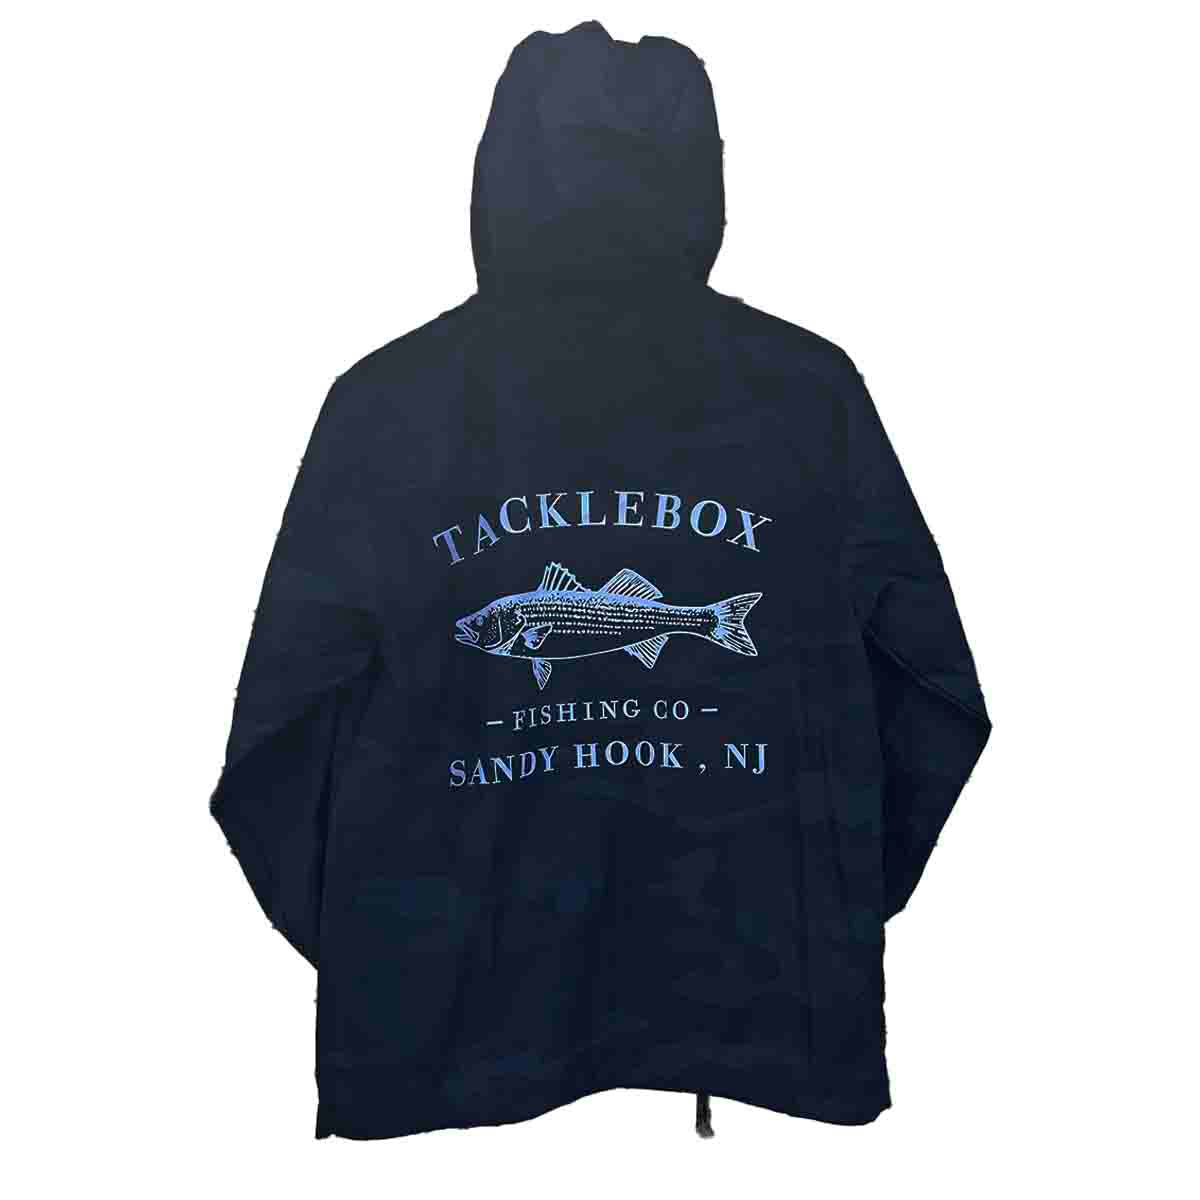 Tackle Box Fish 36 Windbreaker - Black Camo